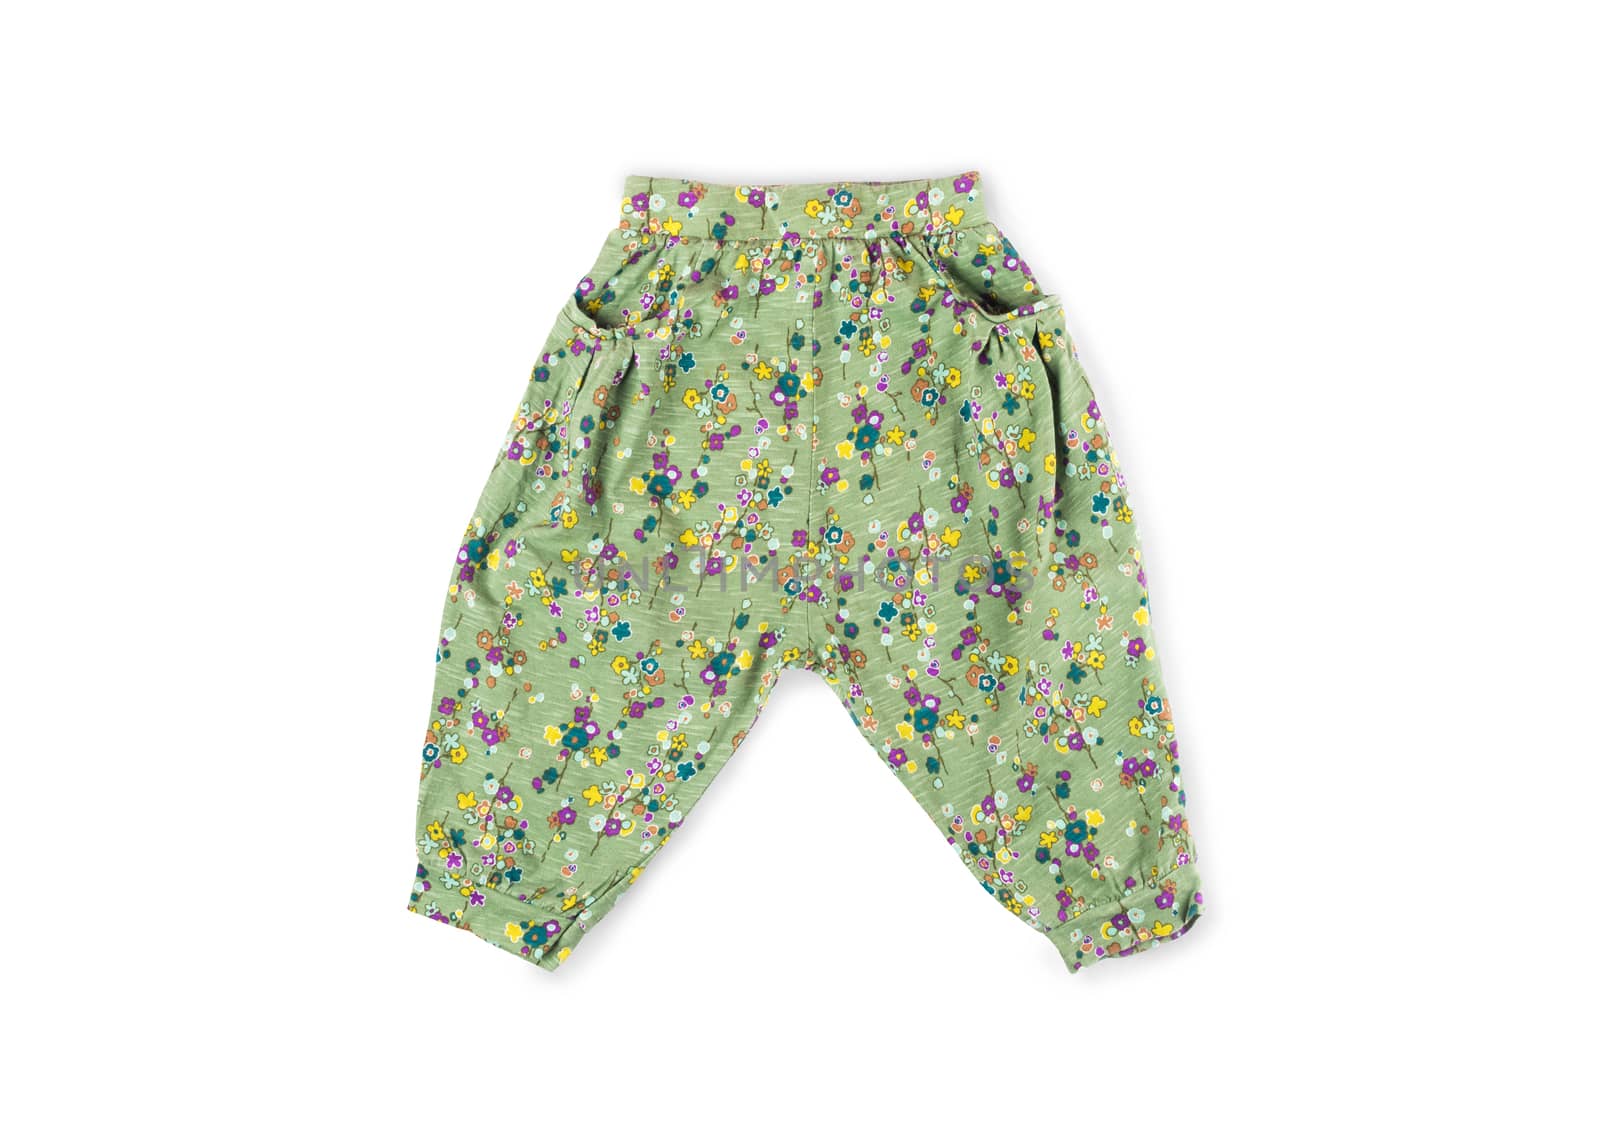  little girl green flowered pants by iprachenko